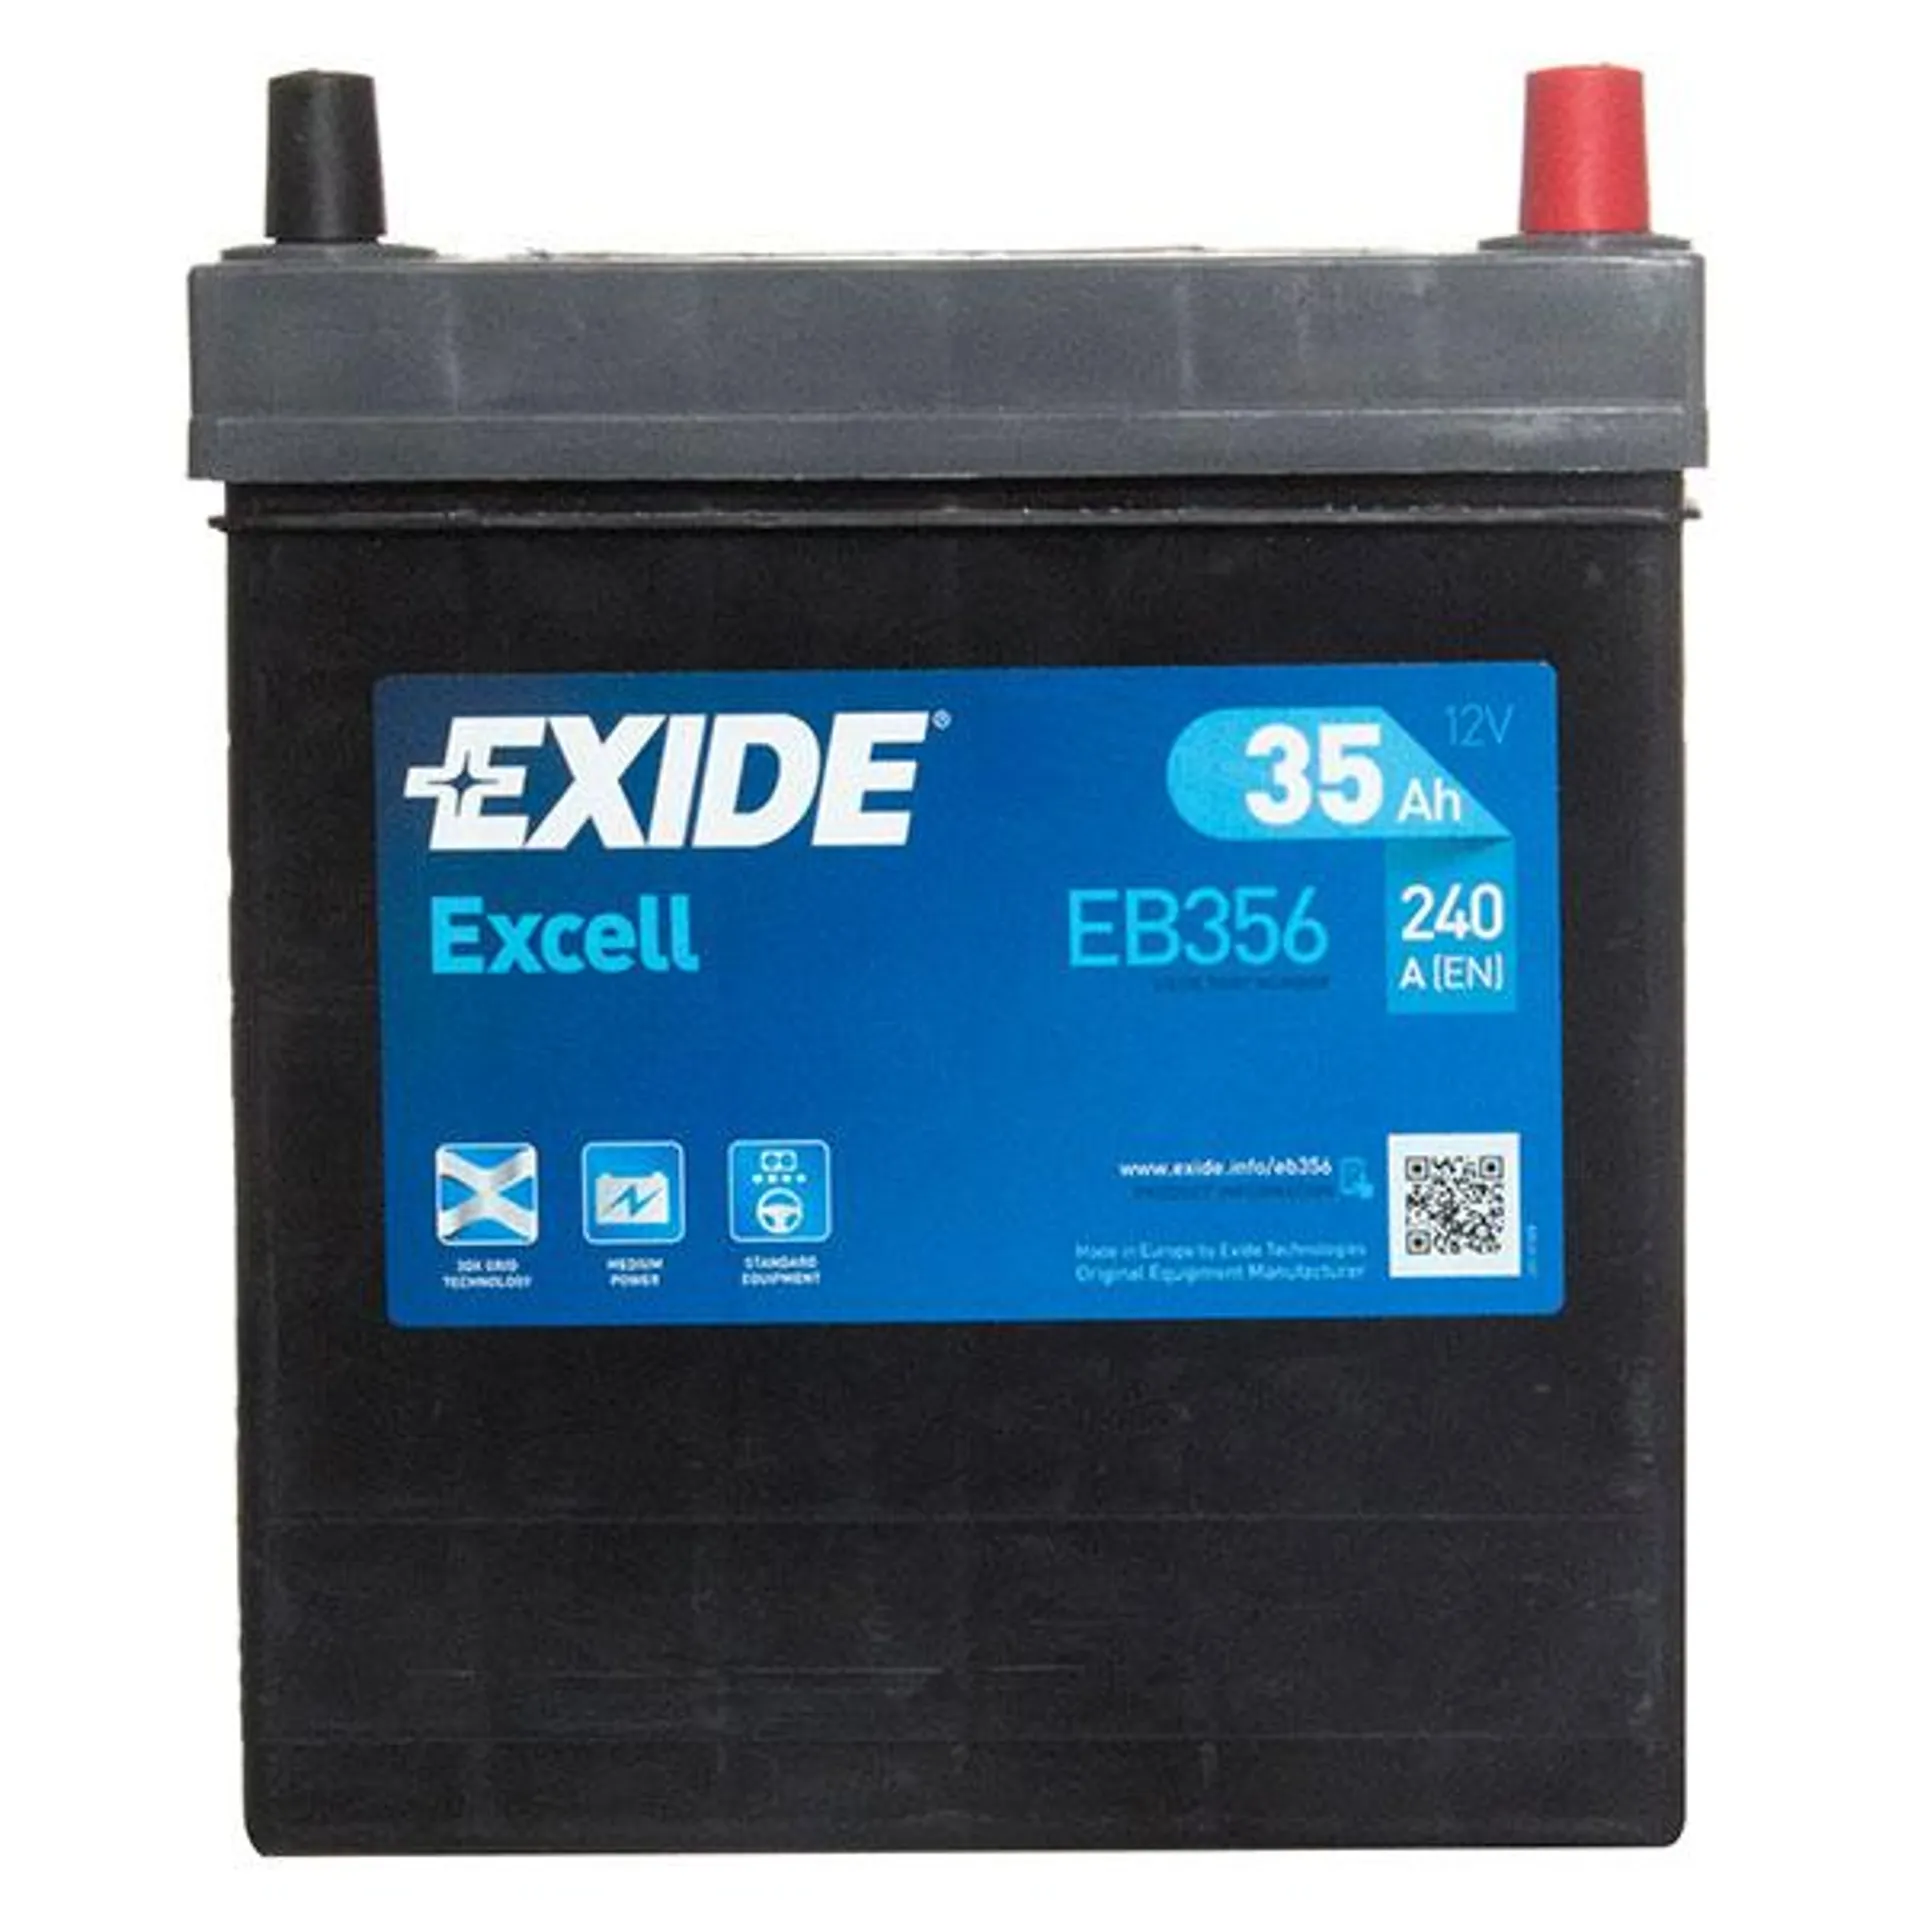 Exide 054 Car Battery - 3 Year Guarantee